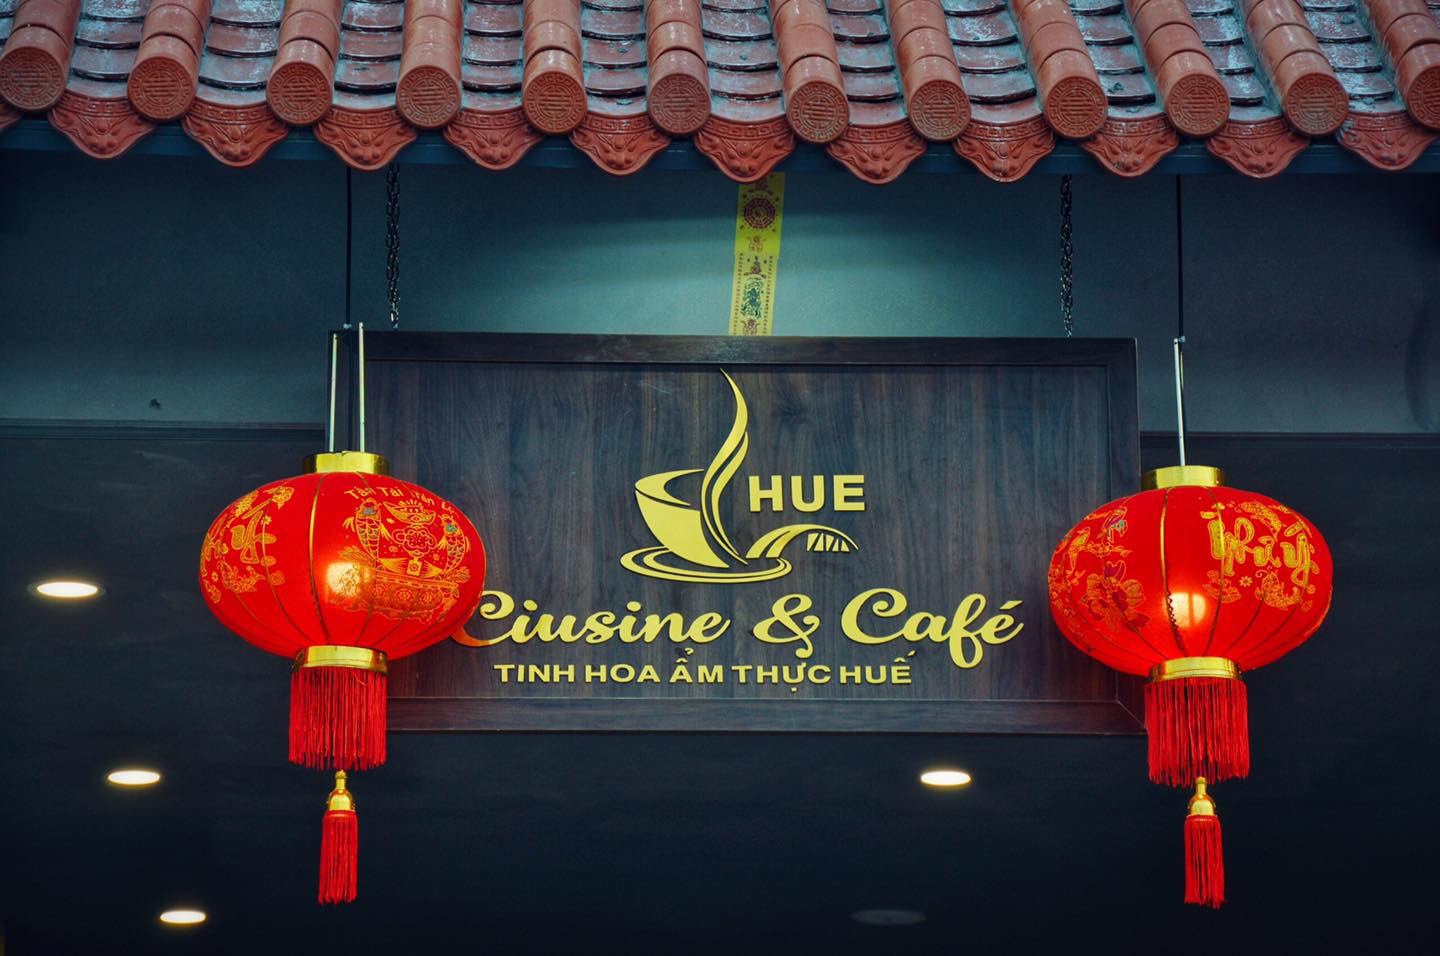 Hue cuisine & Cafe